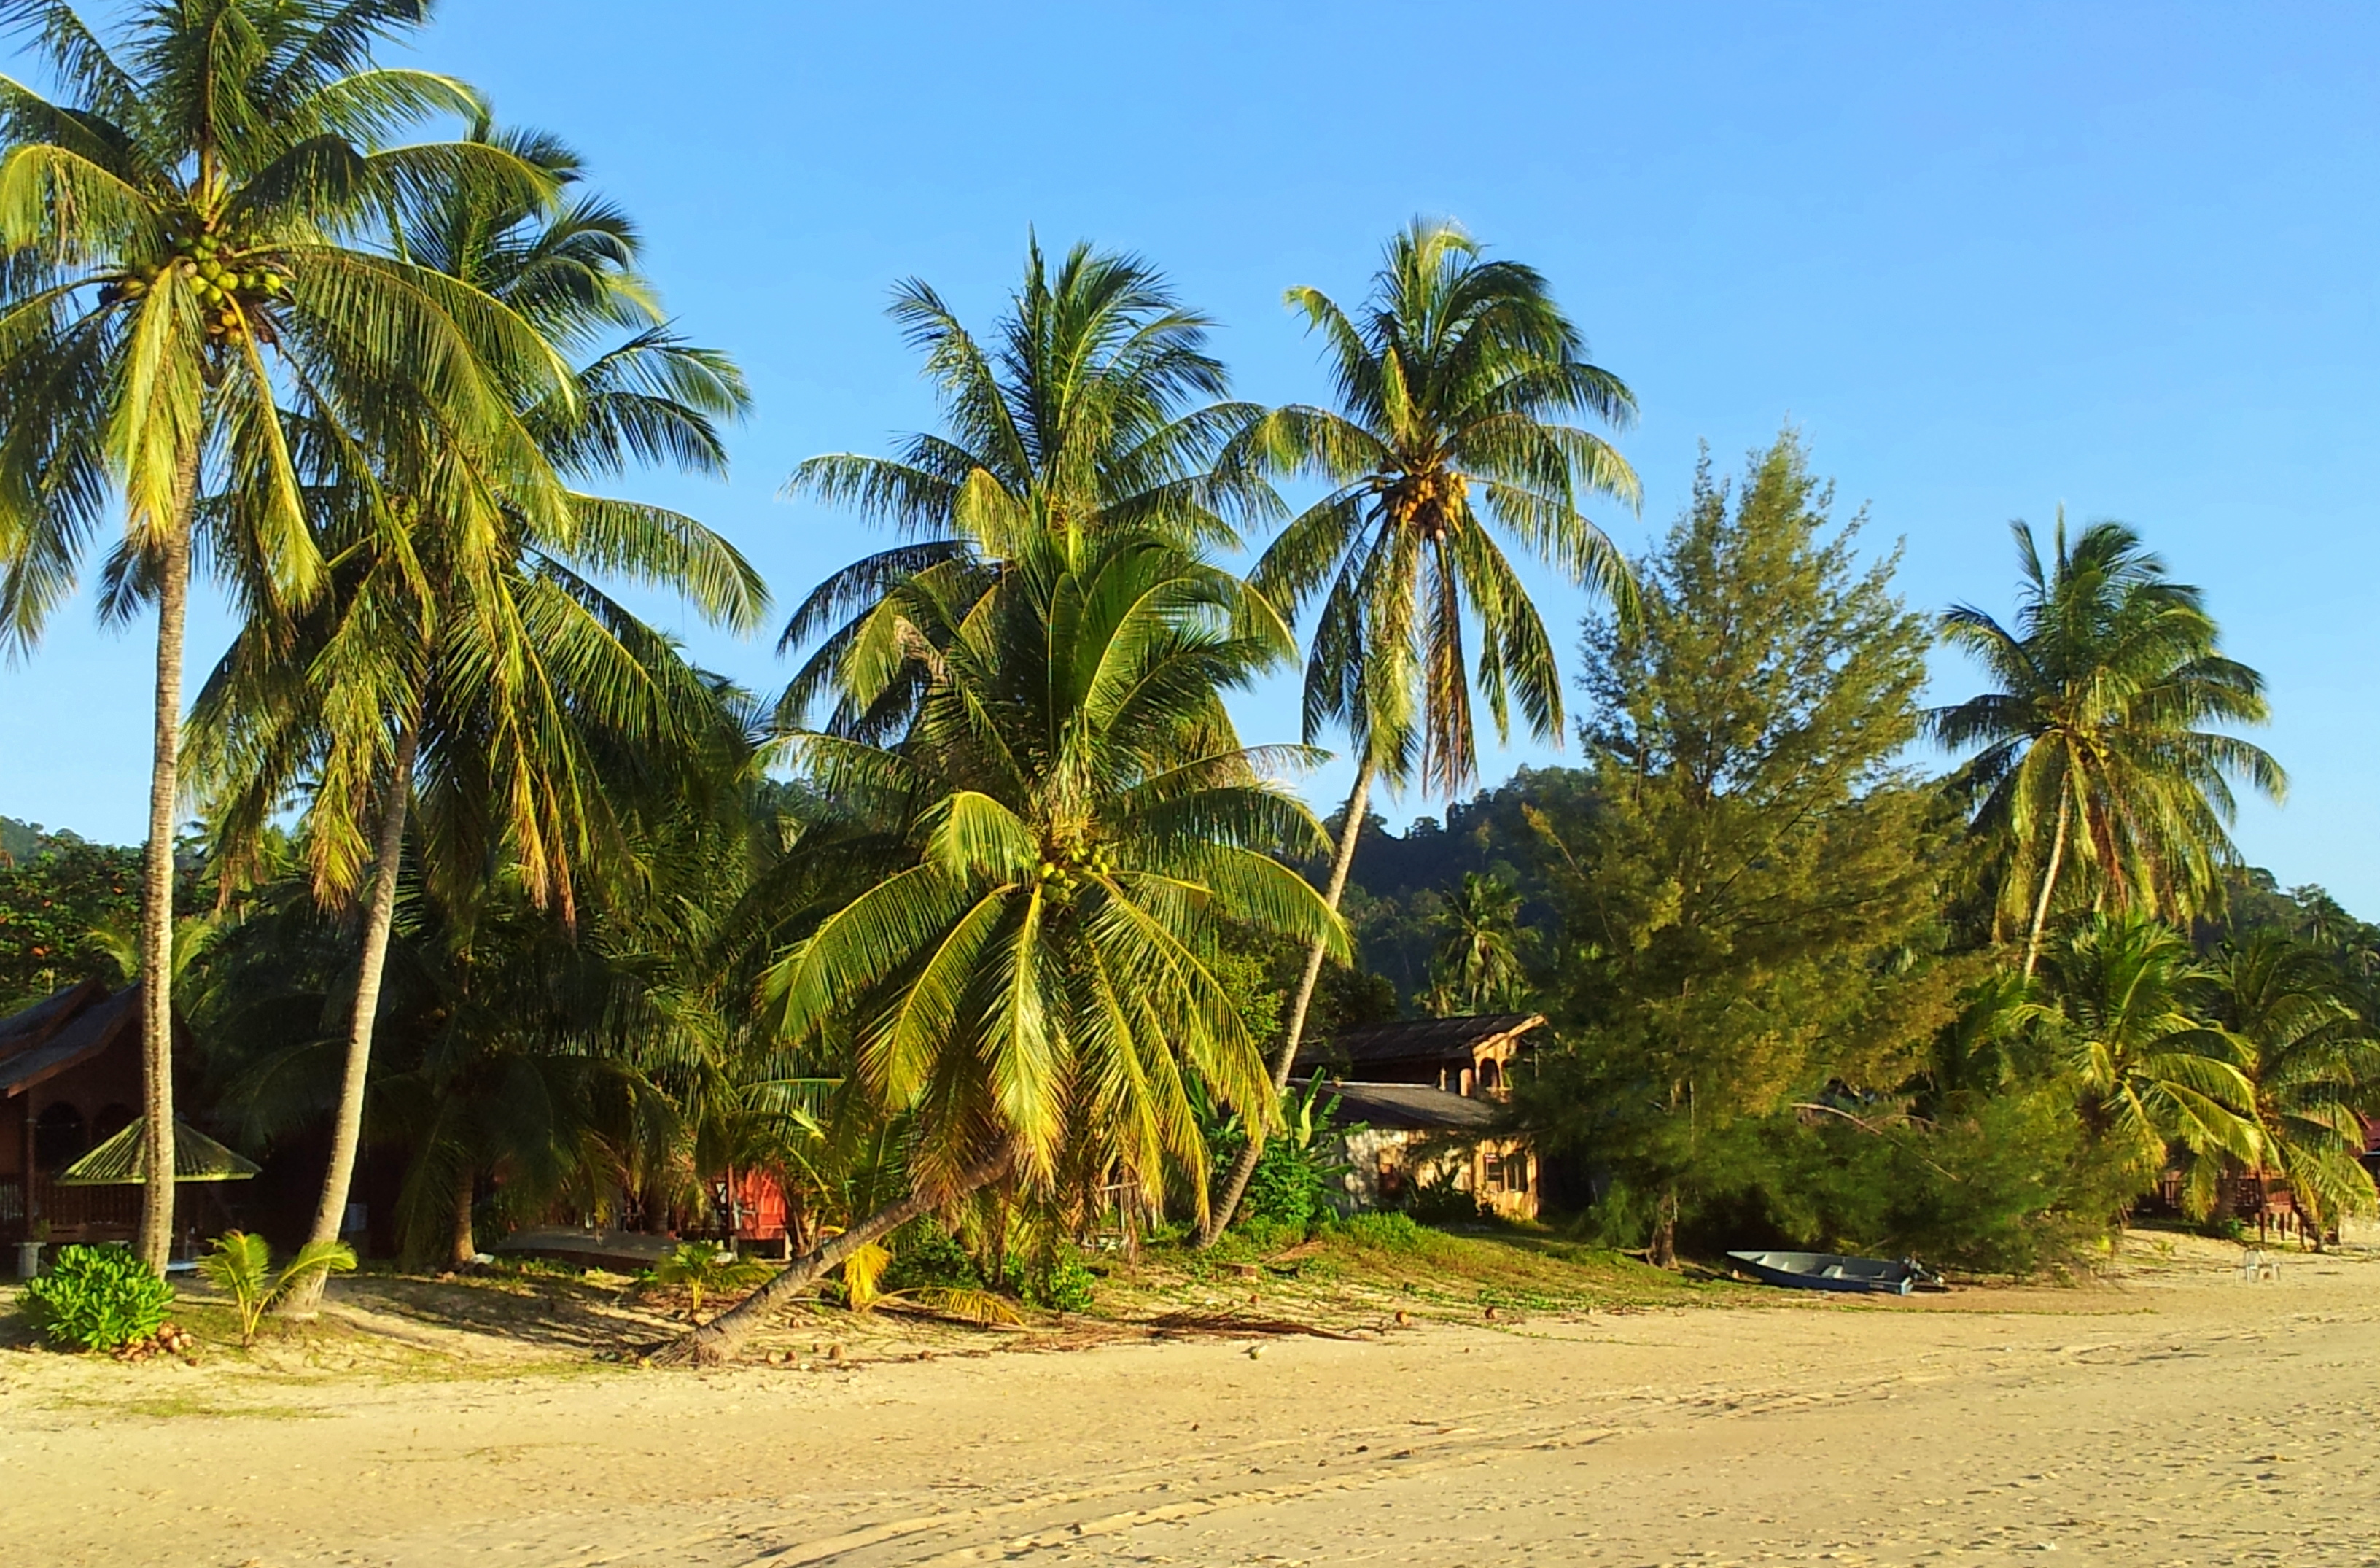 Tioman Islands: A quiet getaway